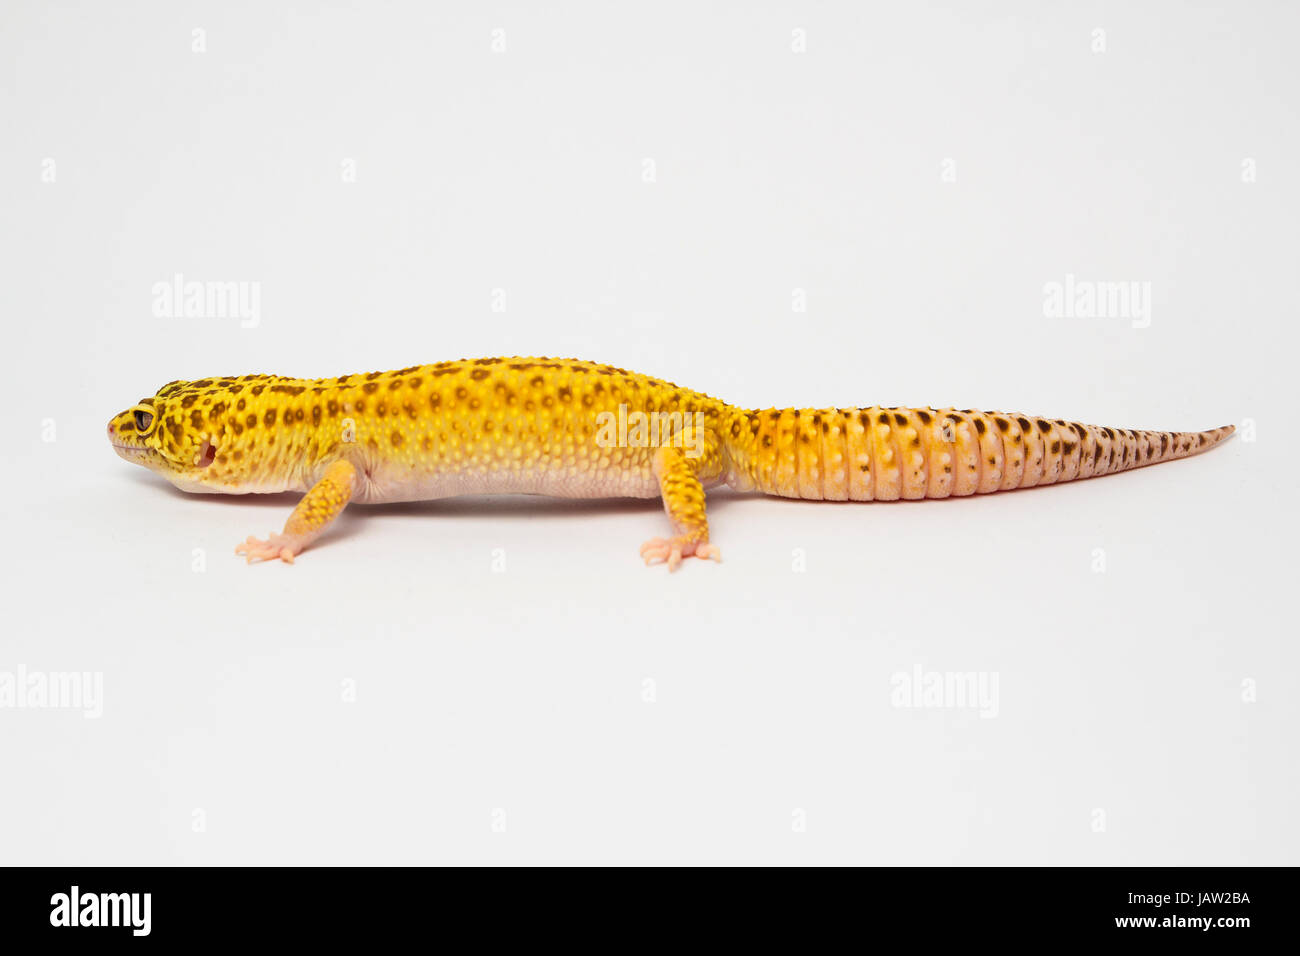 Leopard gecko Eublepharis macularius Stockfoto